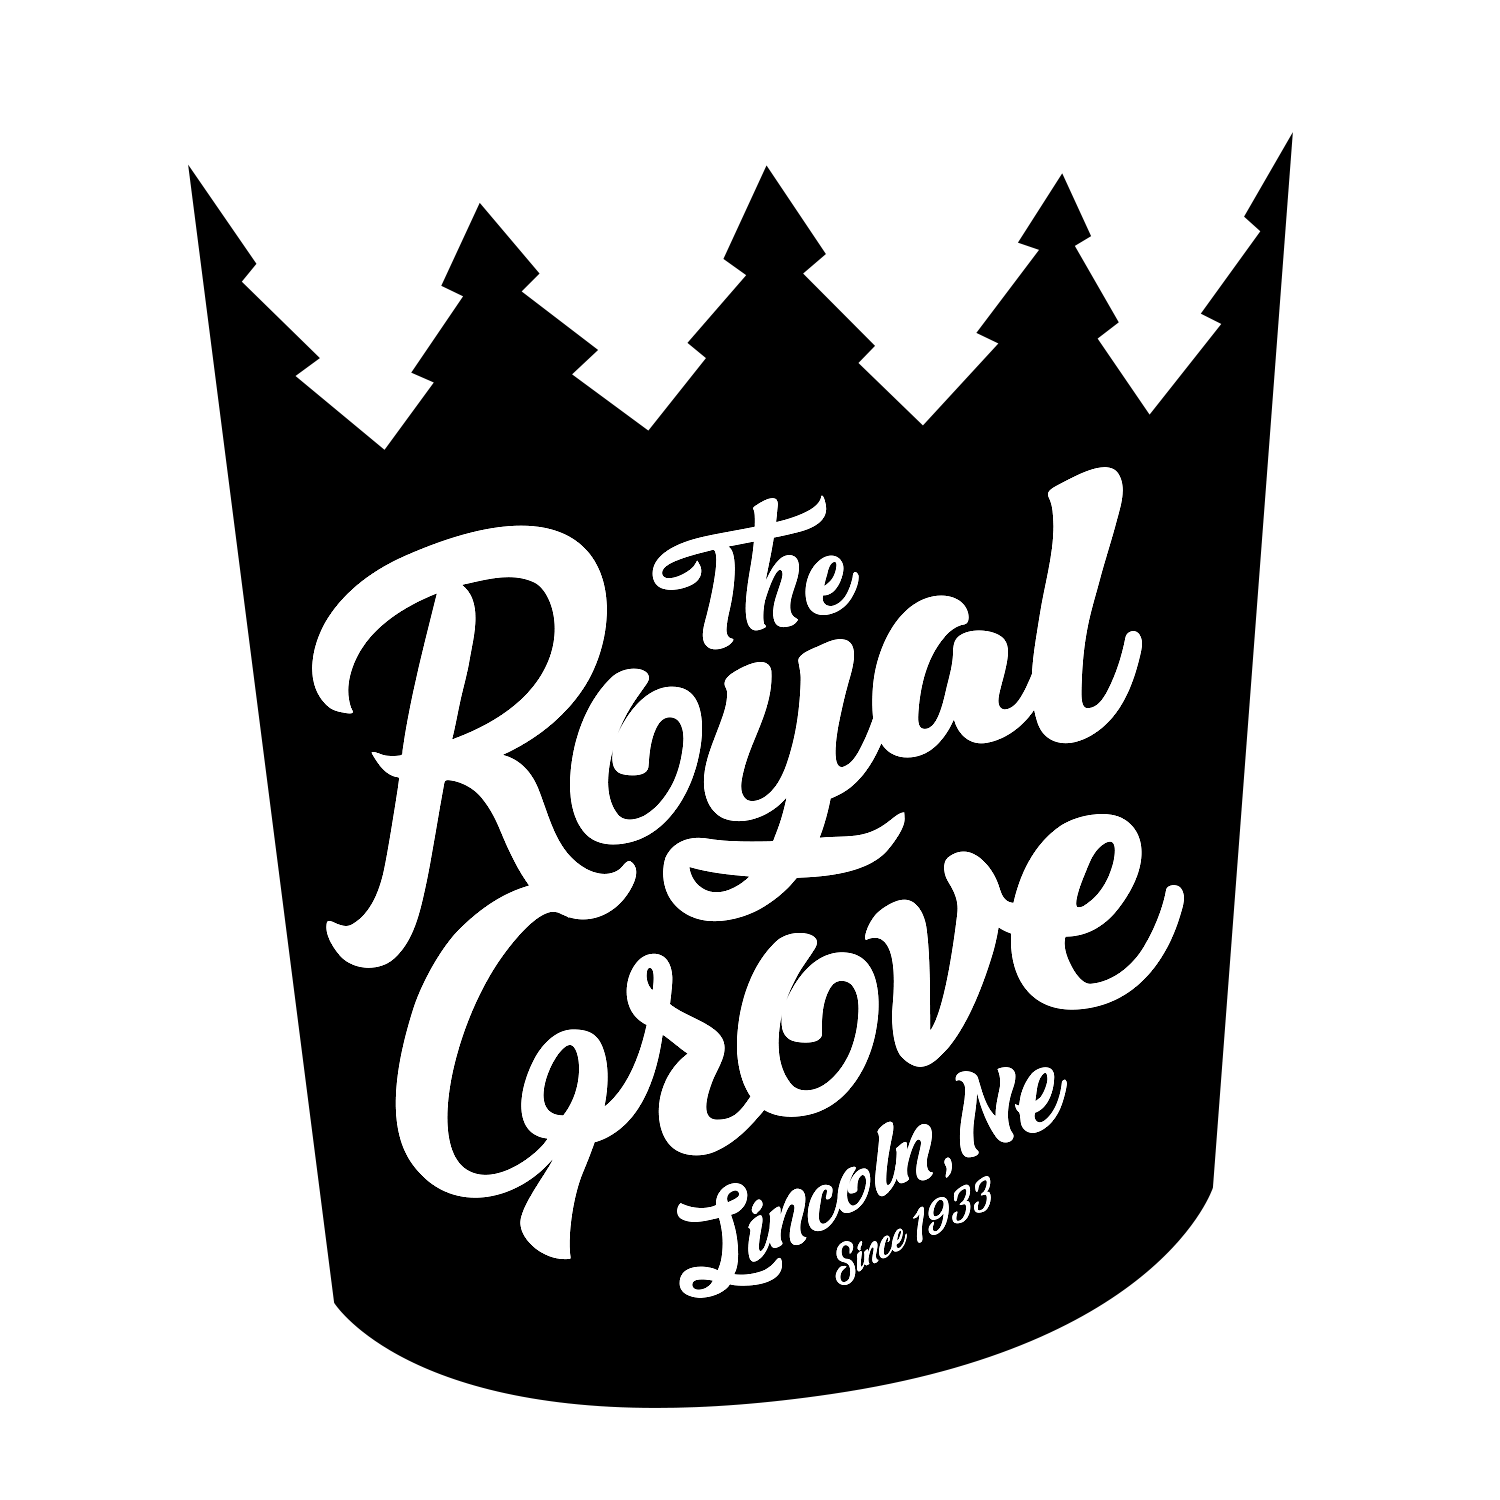 The Royal Grove